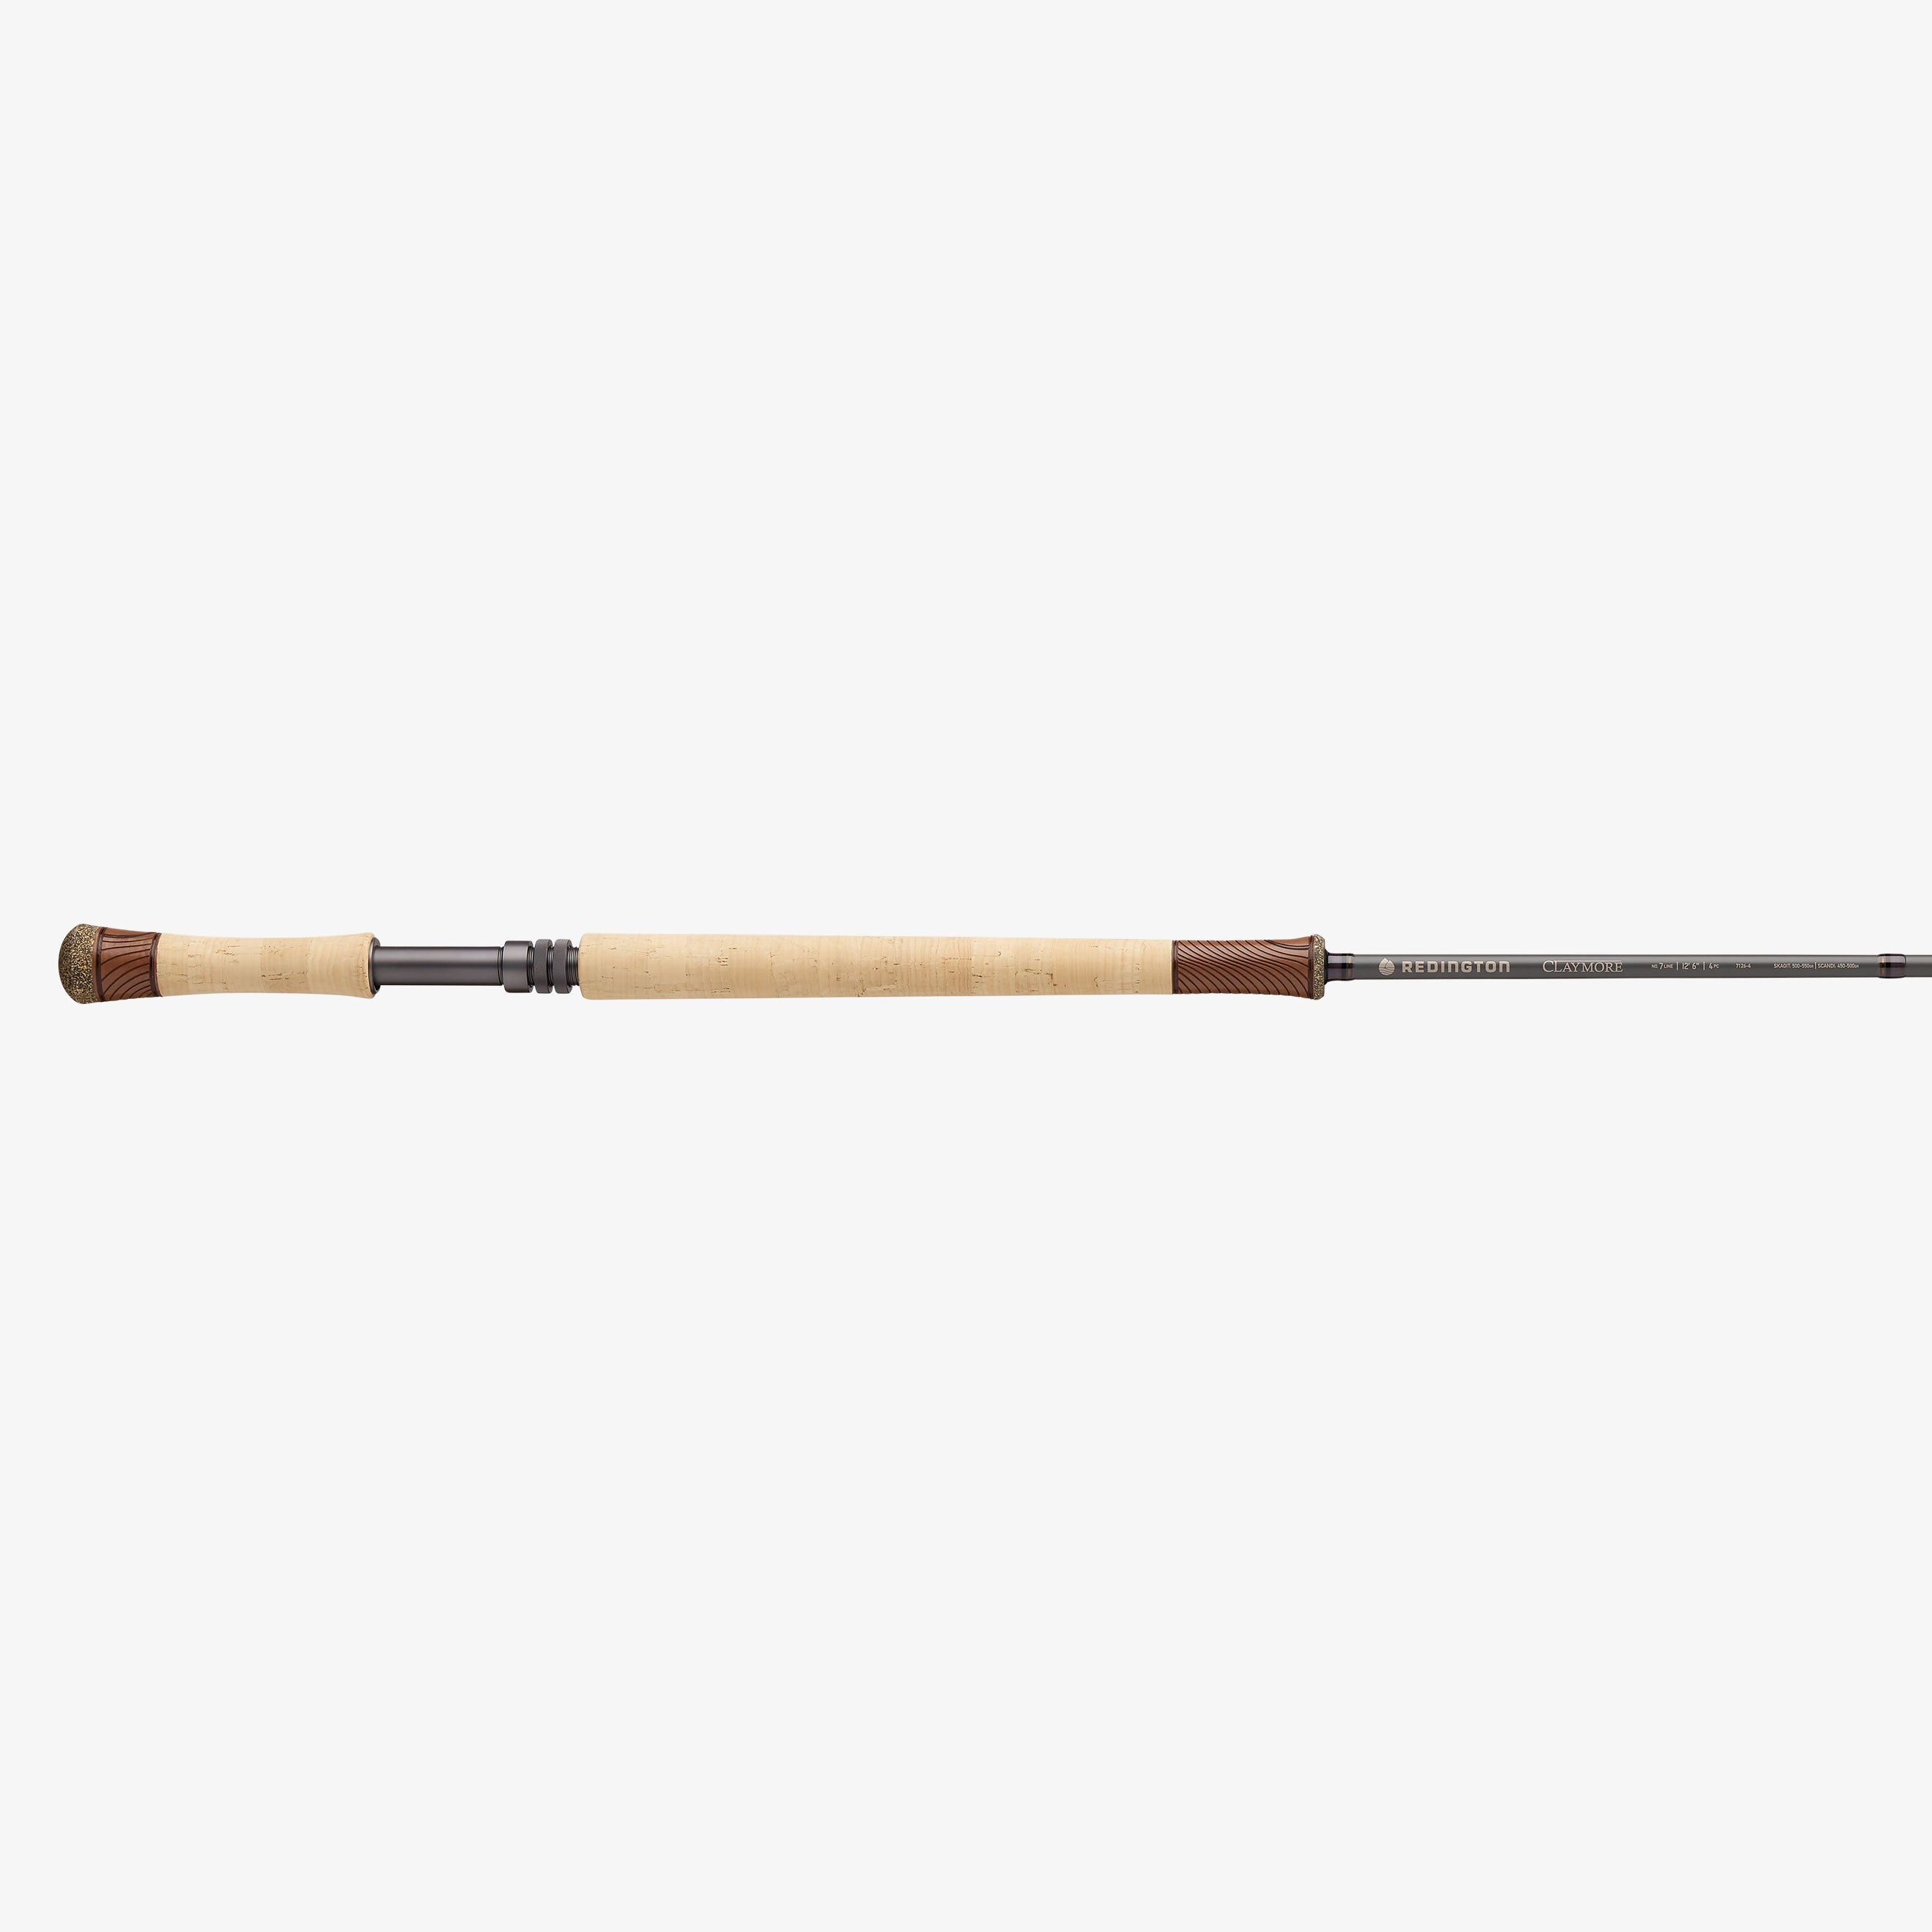 Redington Claymore Spey 12'6 7wt Fly Fishing Rod- 7126-4